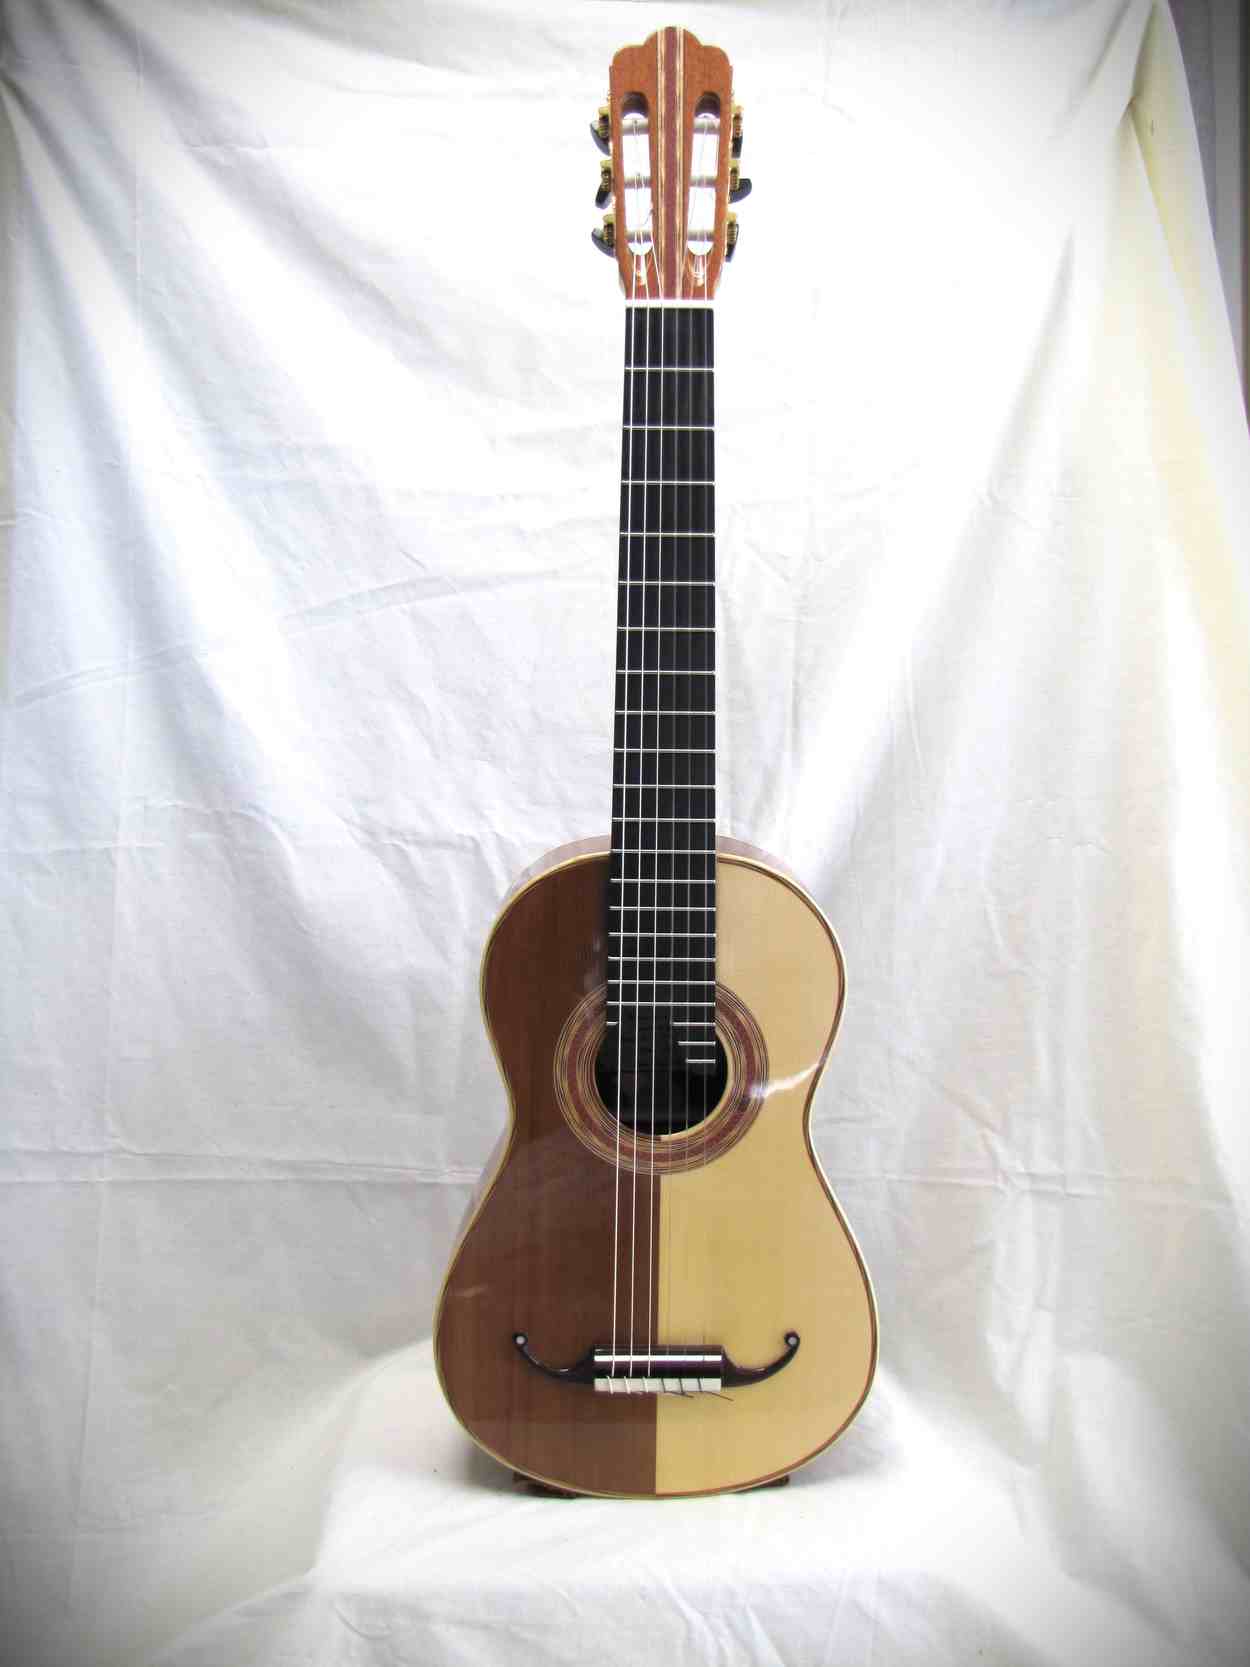 A Rios Nebro Concert Classical Guitar Cedar Cedar and Spruce top